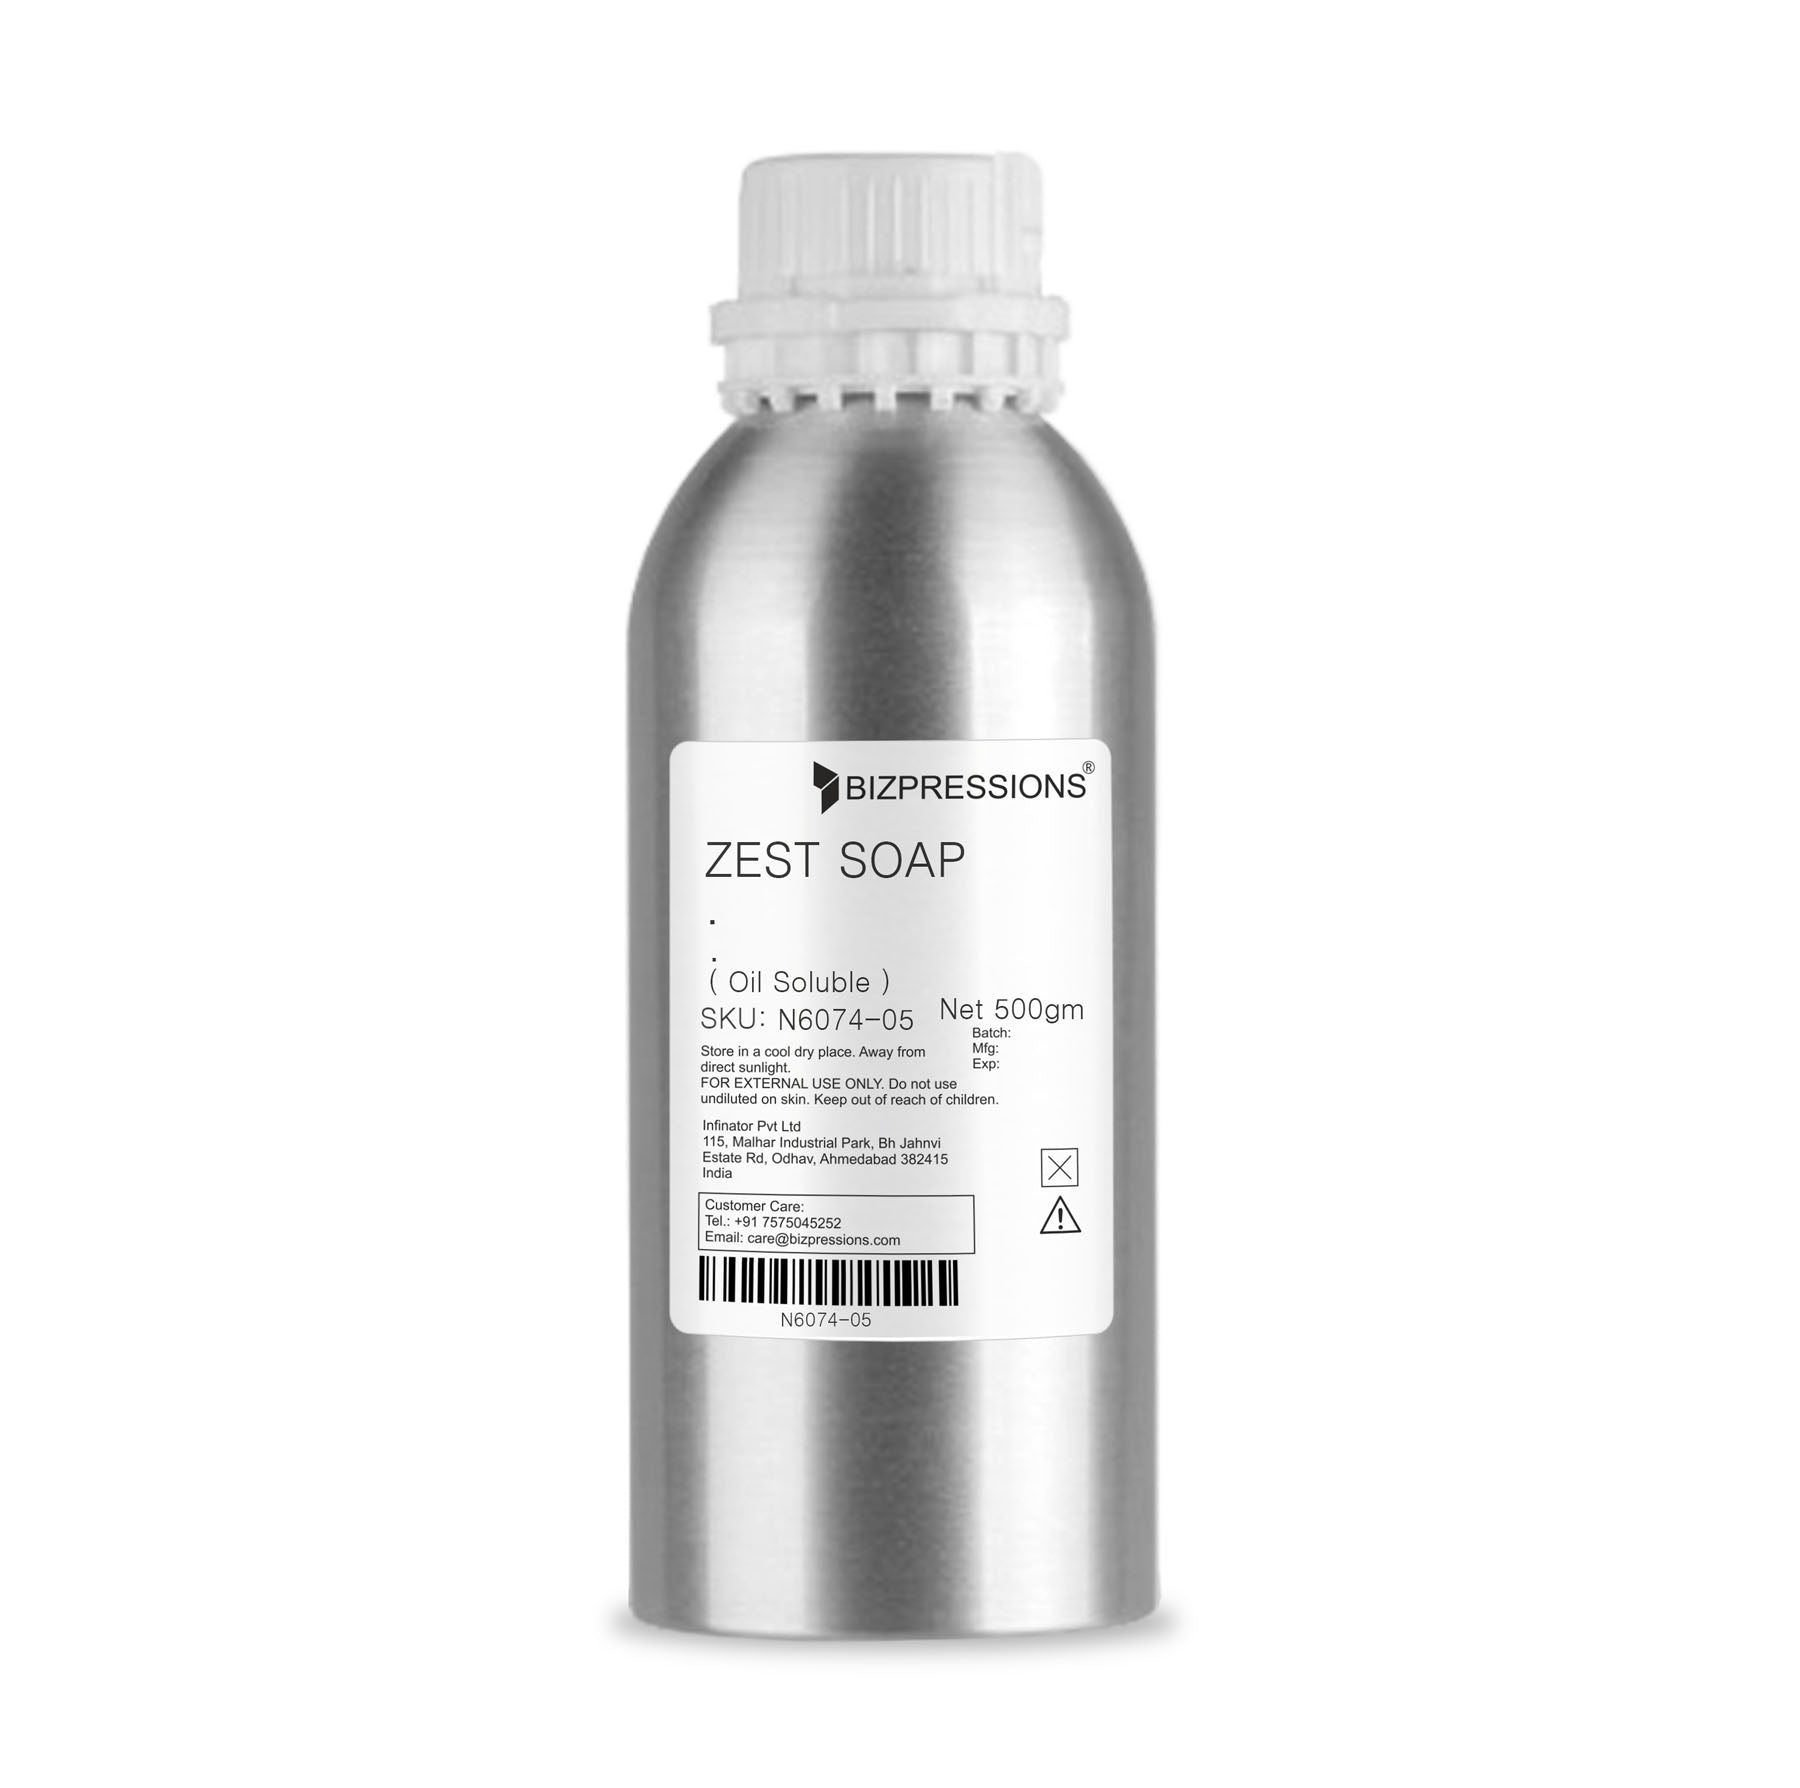 ZEST SOAP - Fragrance ( Oil Soluble ) - 500 gm